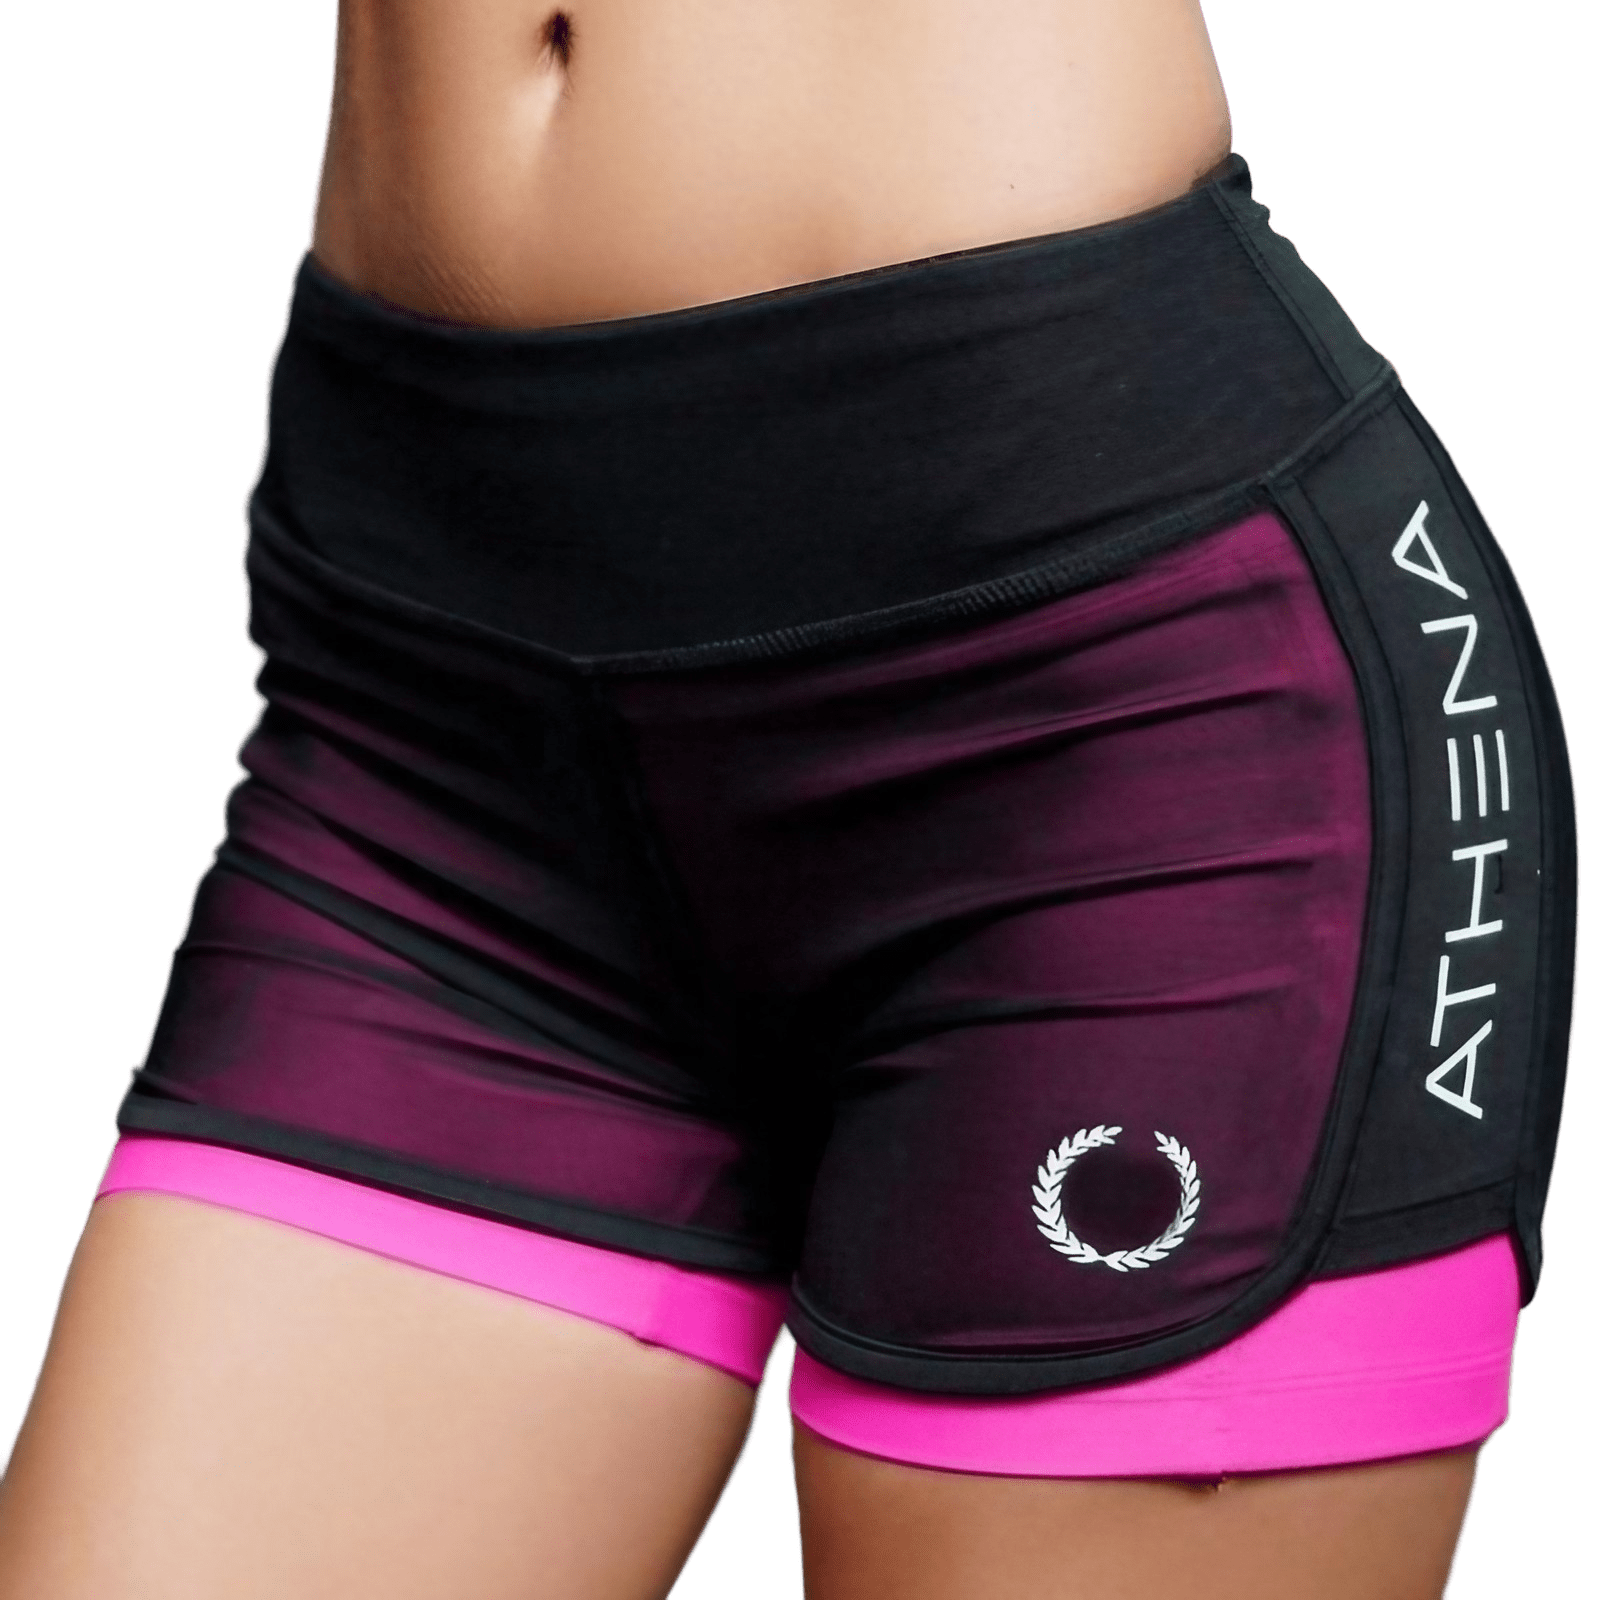 ALLRJ Shorts Athena Sexy Women's Workout Shorts